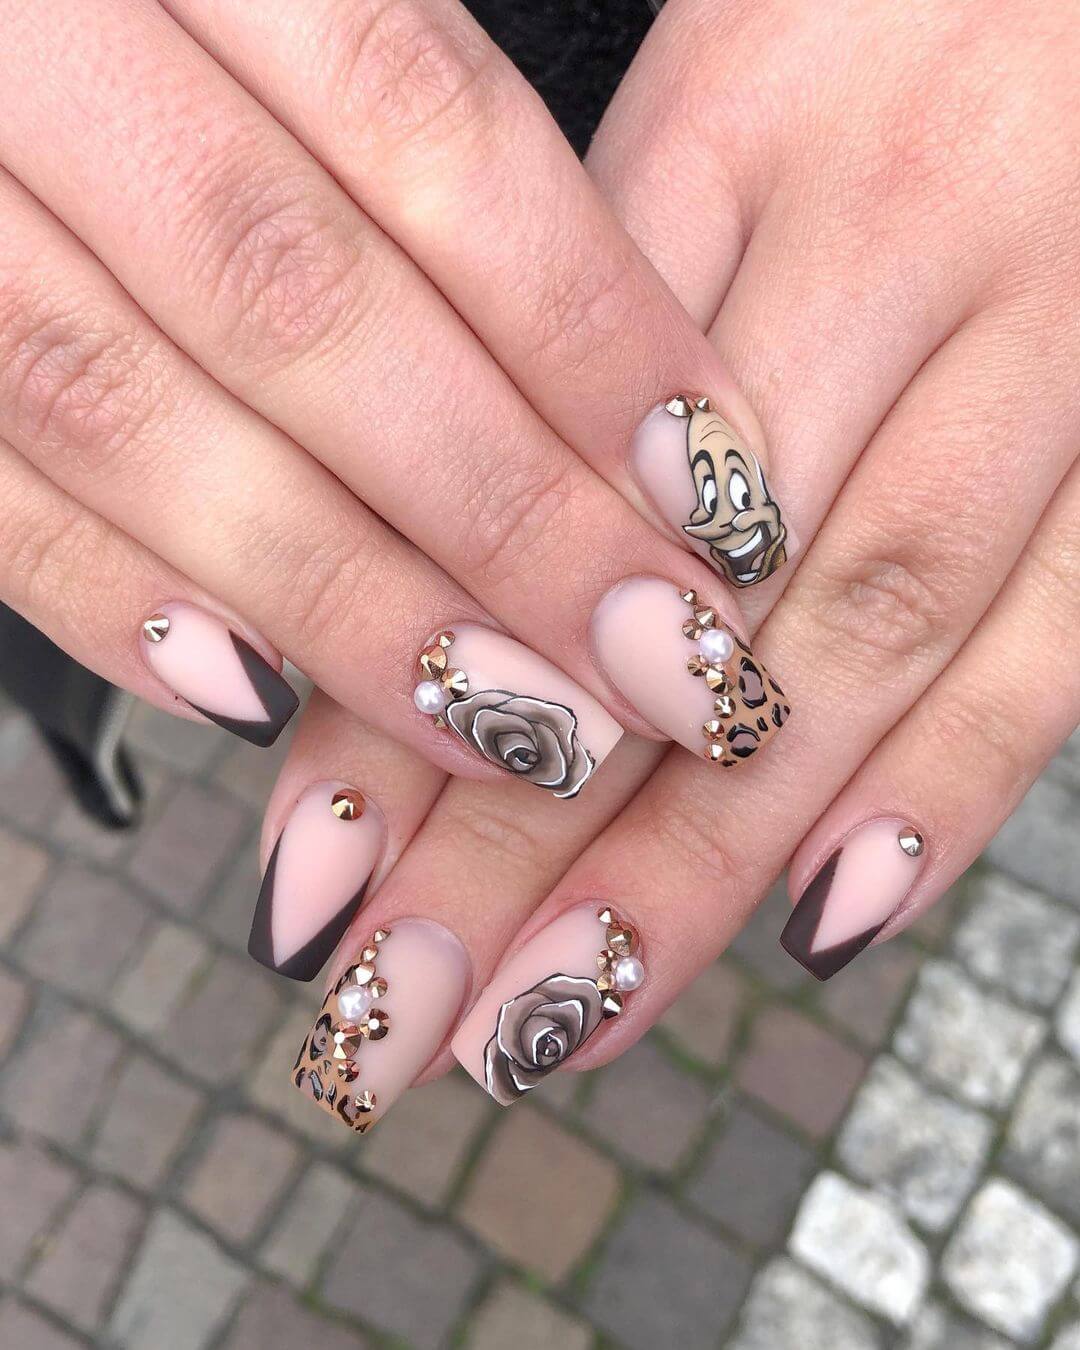 Disney Nail Art Designs Leopard themed cool nail art